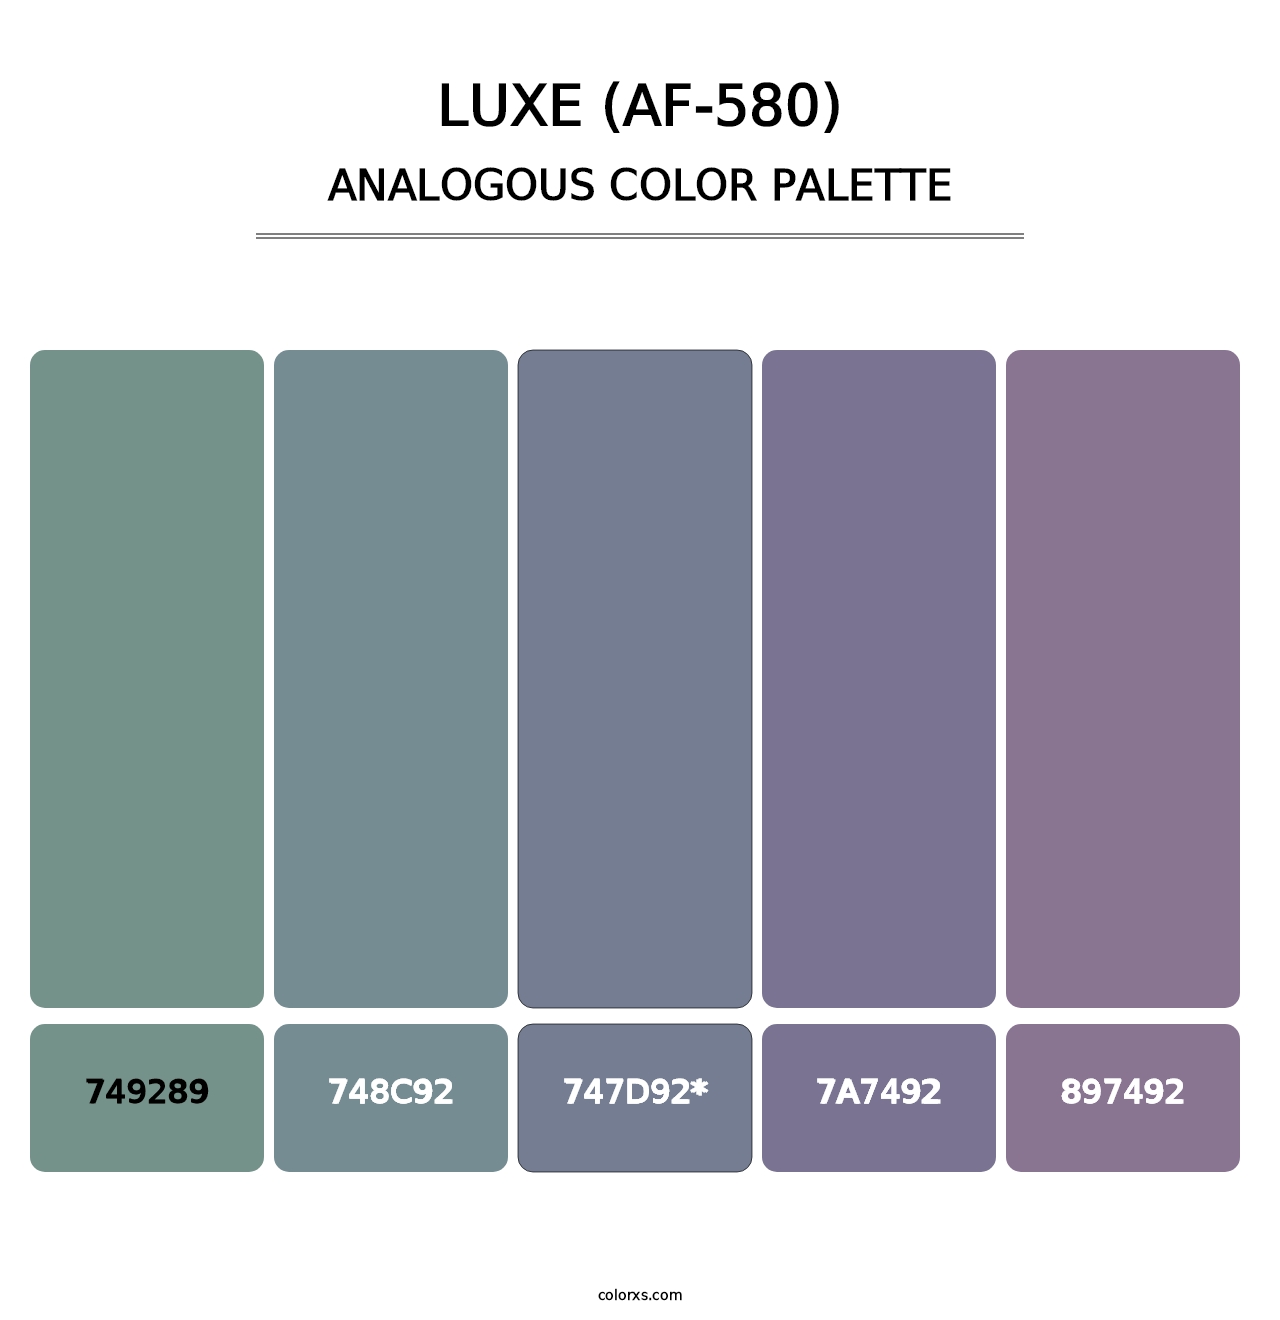 Luxe (AF-580) - Analogous Color Palette